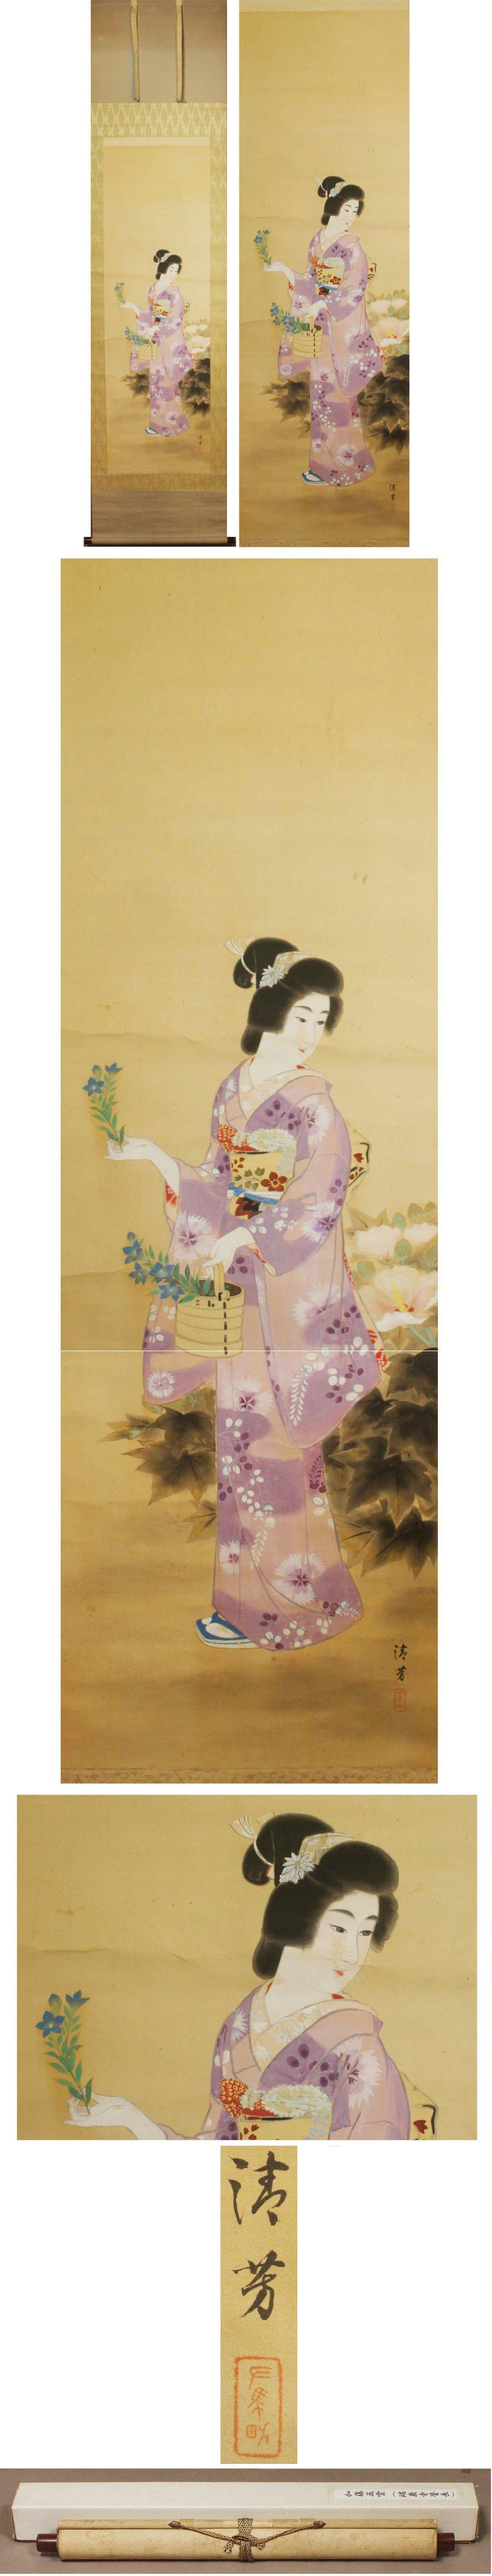 [Kiyoshi Shimizu]

Born in Tokyo in 1909, Kiyoshi Shimizu was a Japanese painter active during the early Showa period. Residing in Adachi Ward, Tokyo, he apprenticed under Yokoo Yoshitsuki, specializing in paintings of beautiful women and flora and